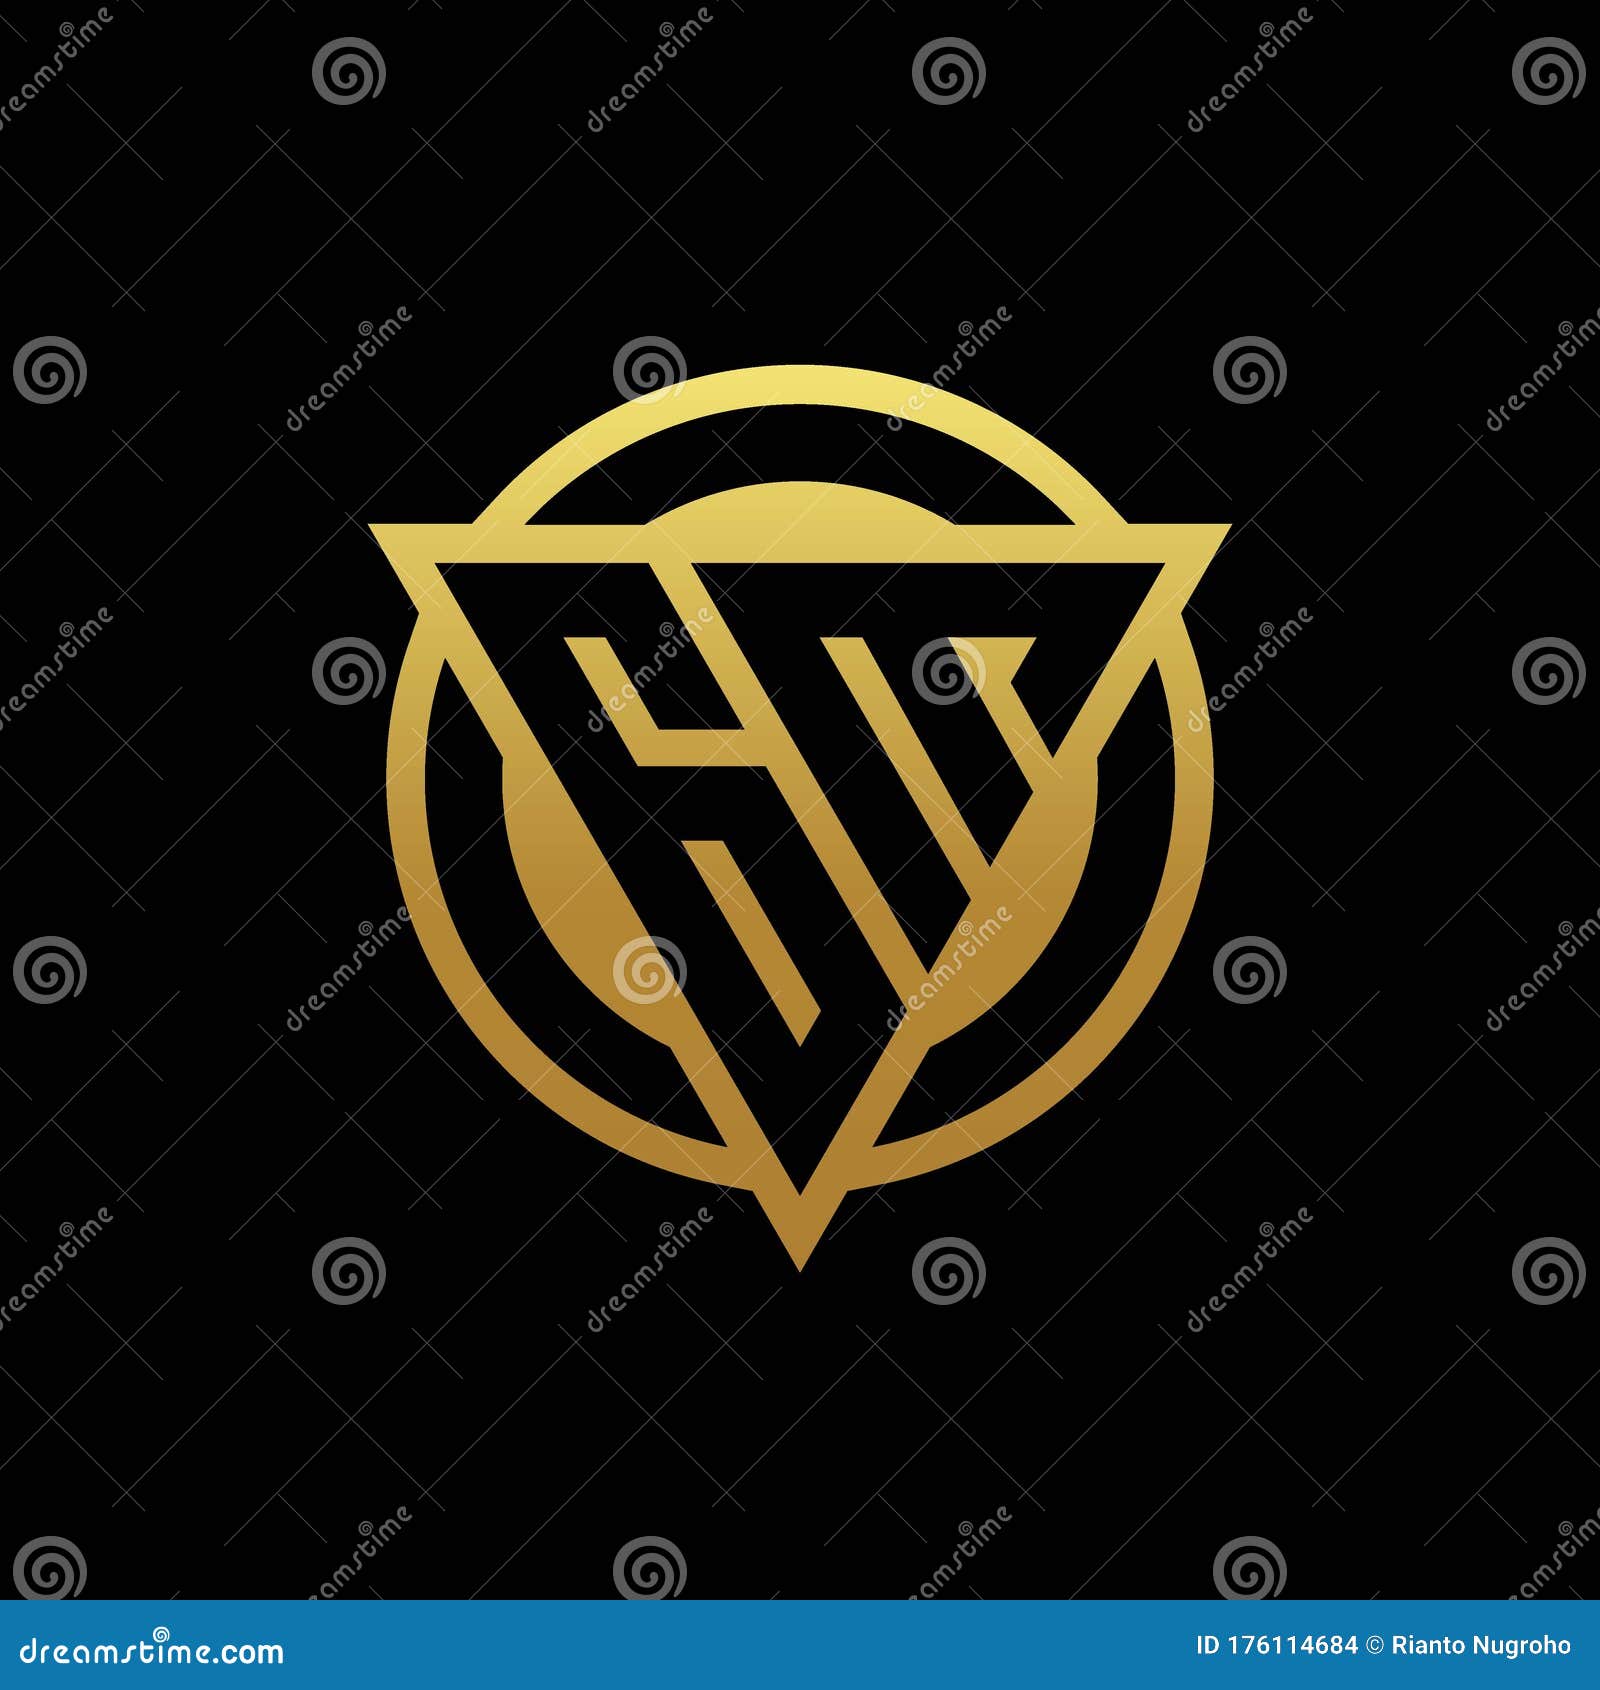 Gm logo monogram with emblem style isolated Vector Image